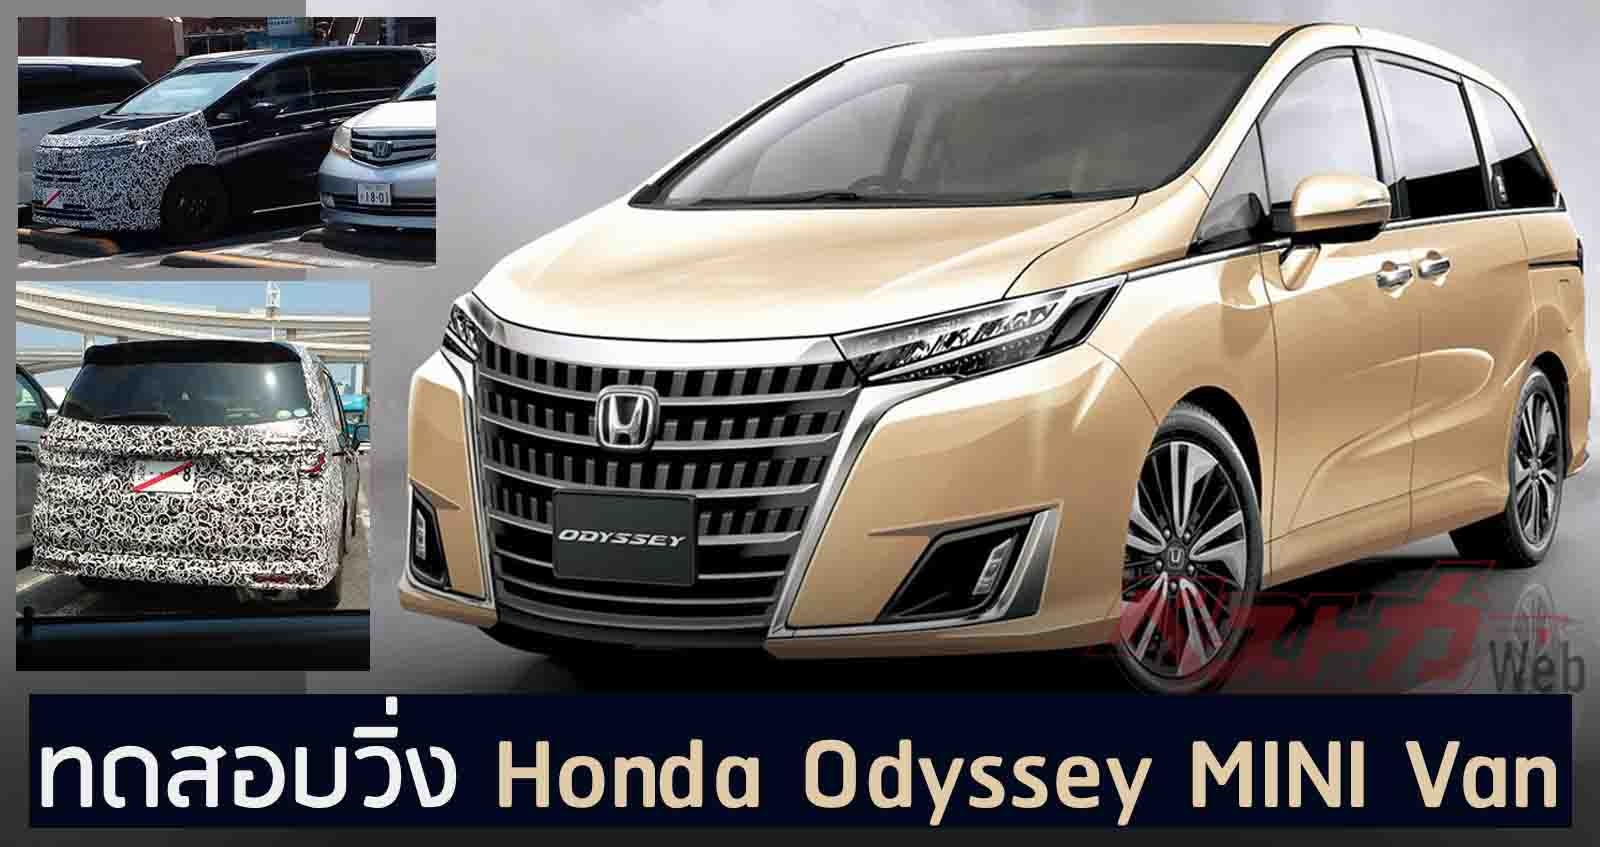 Honda Odyssey MINI Van เจนใหม่ ลุ้นเปิดตัว ตุลาคม ในญี่ปุ่น